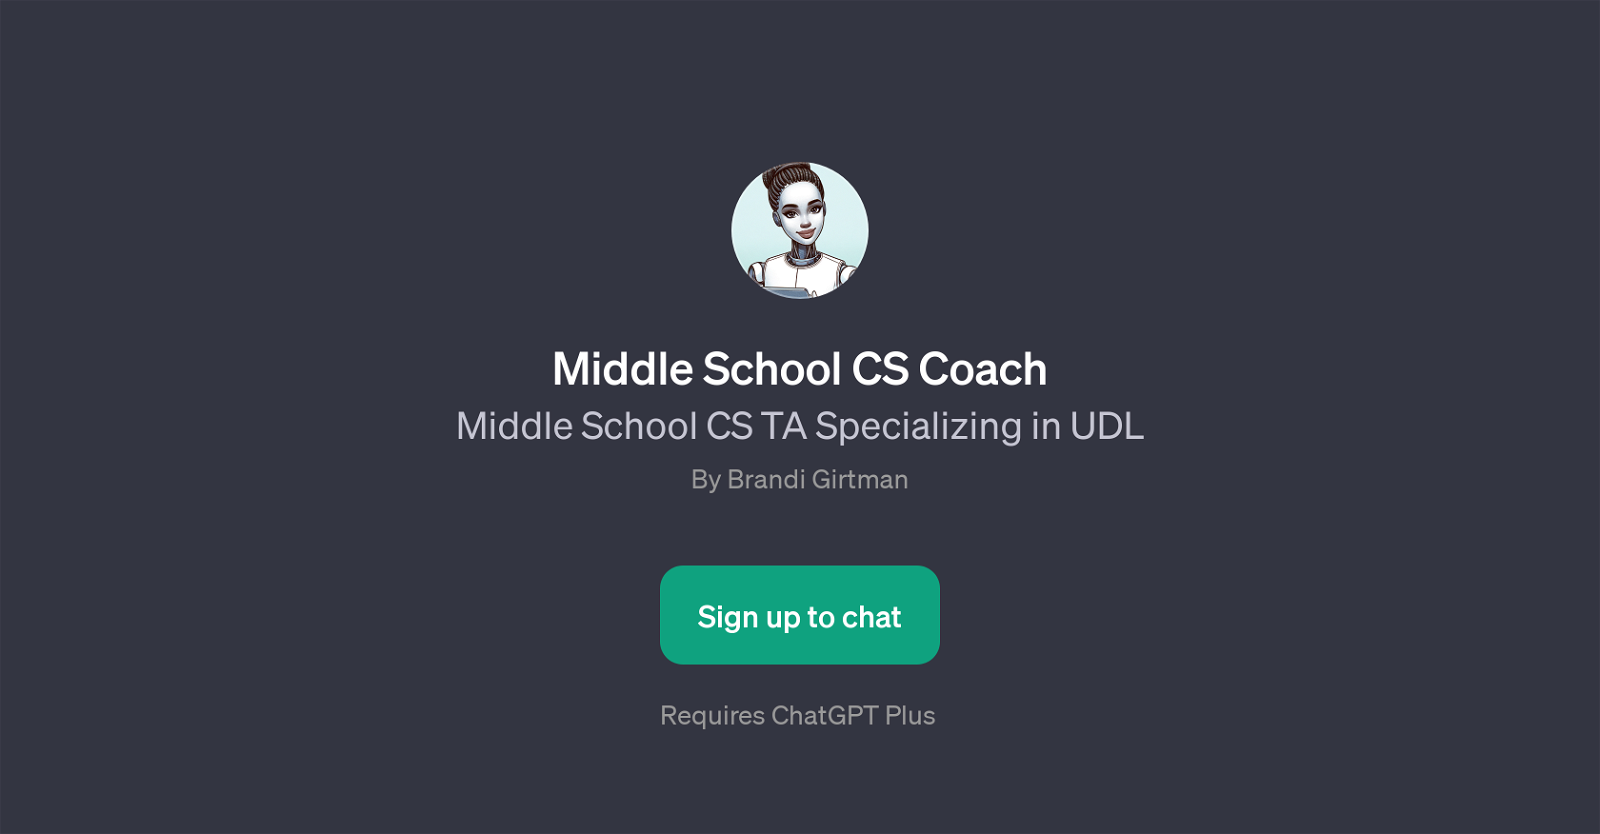 Middle School CS Coach website